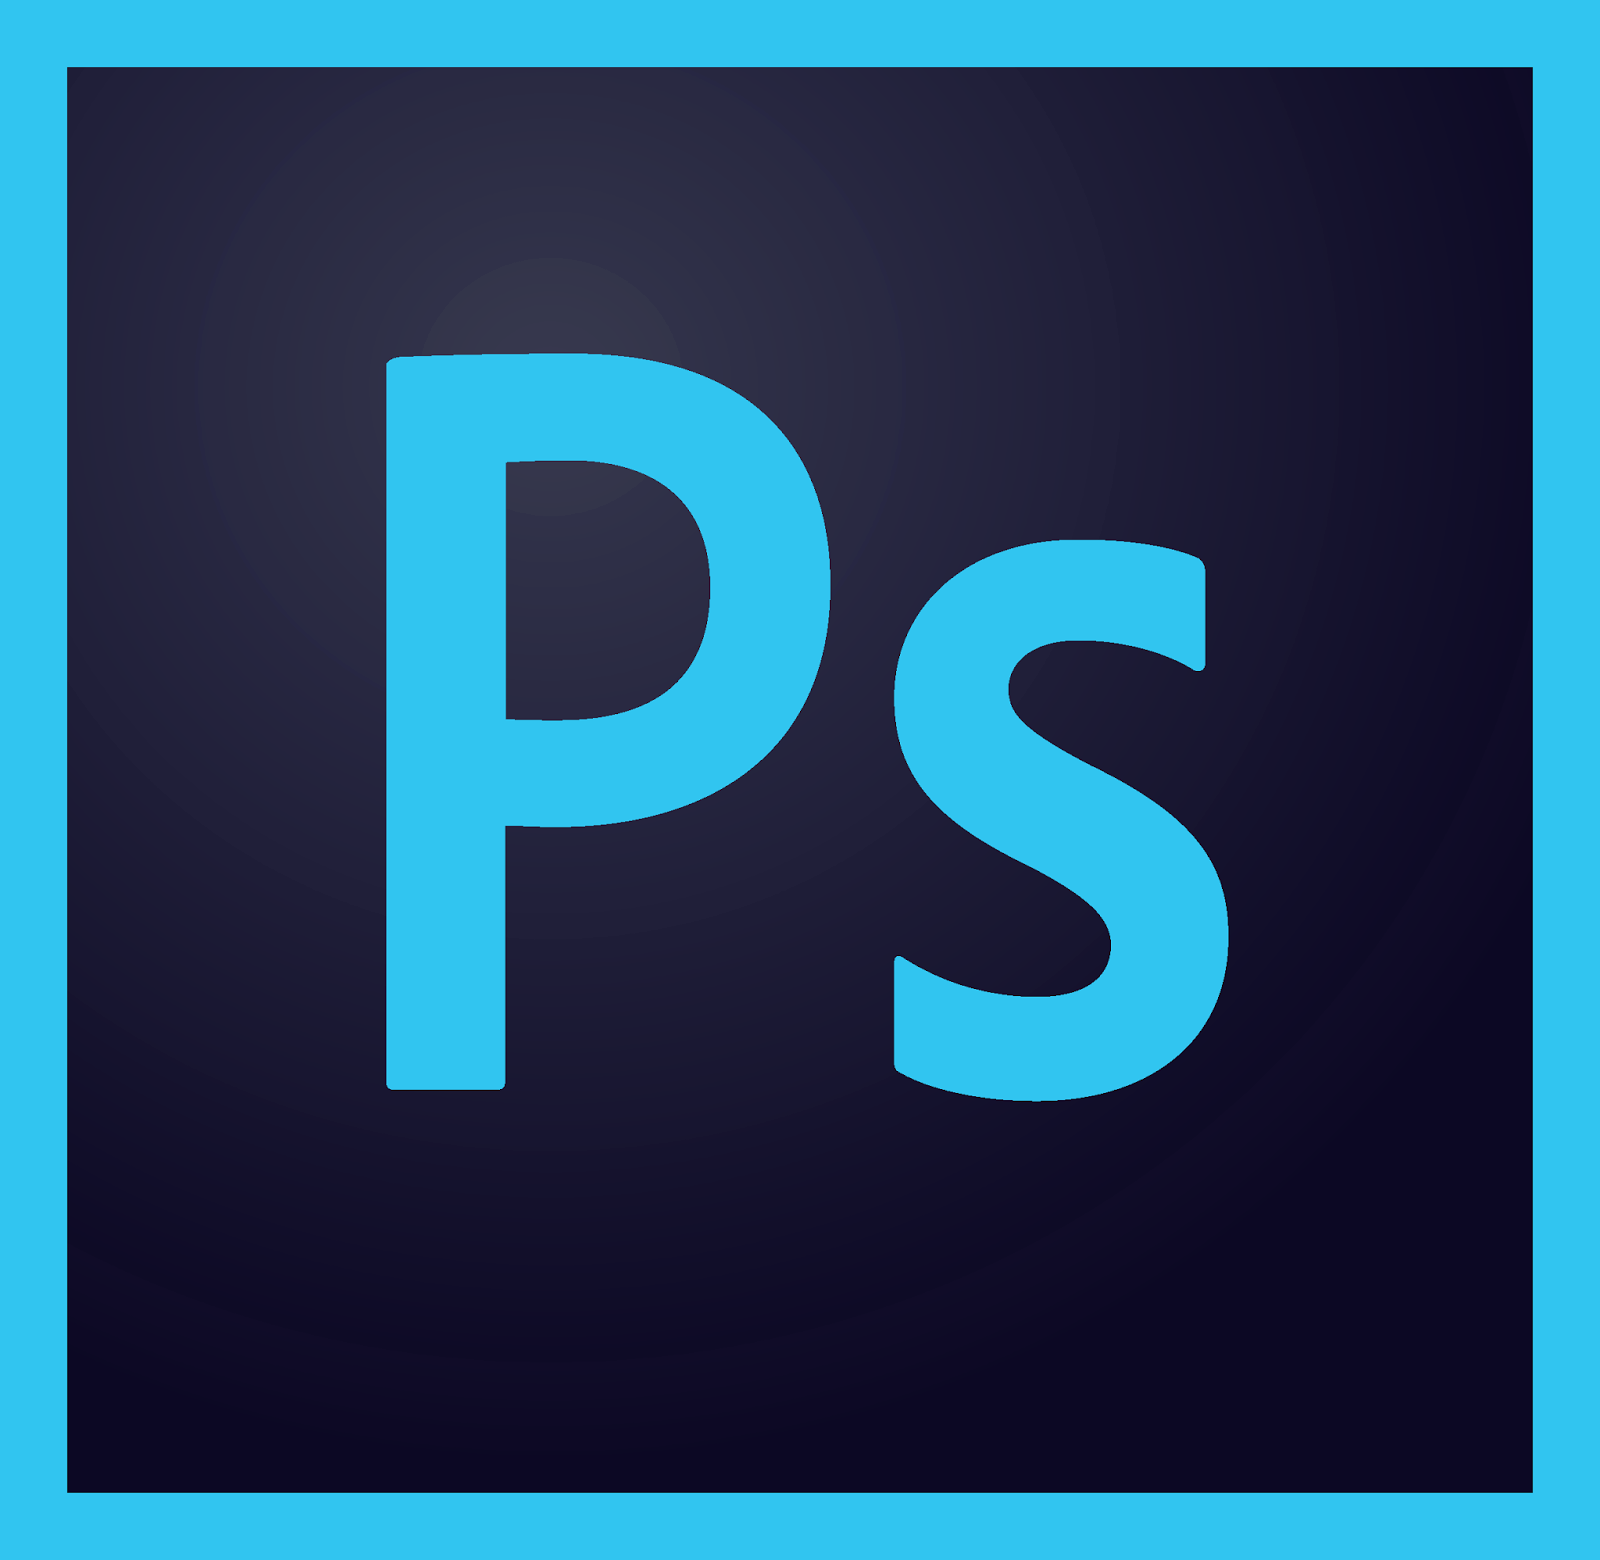 Adobe Photoshop CC 2017 18 0 Universal Patch By Painter 